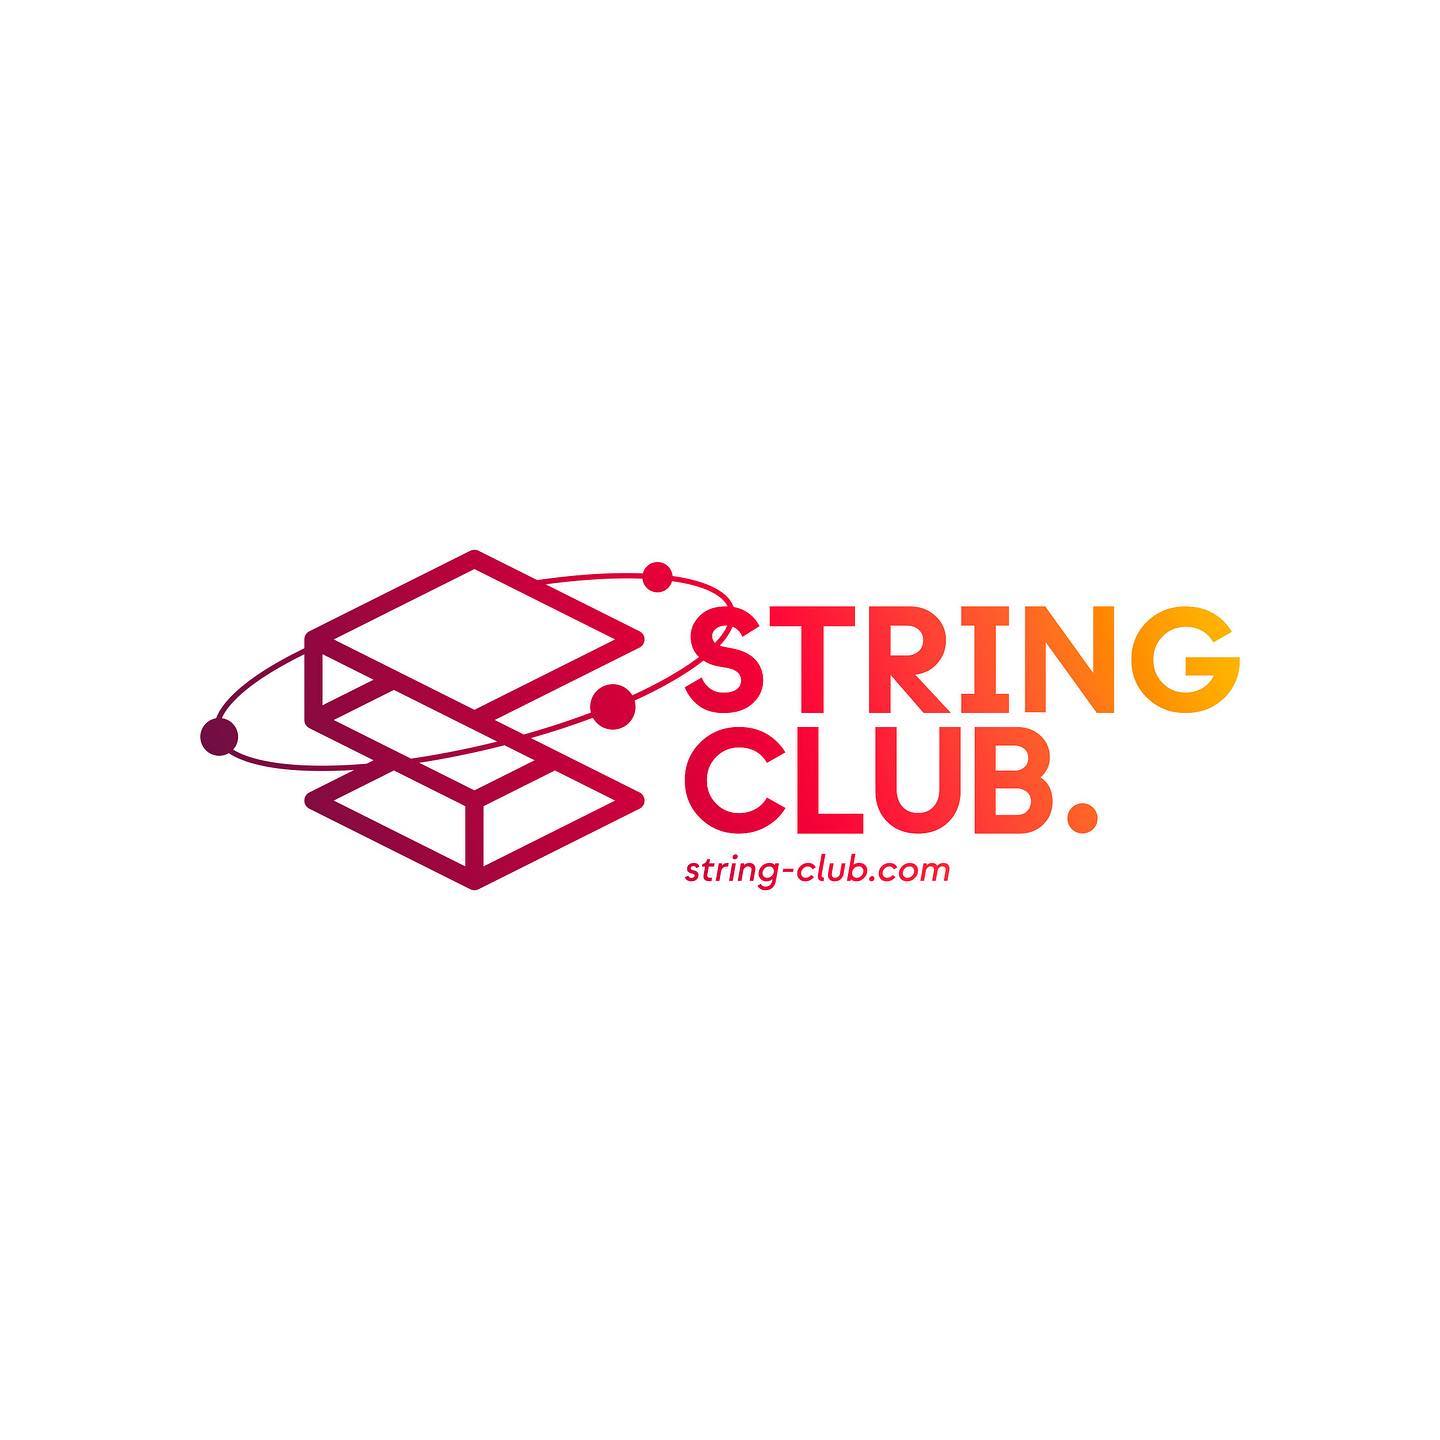 Identidad corporativa String Club